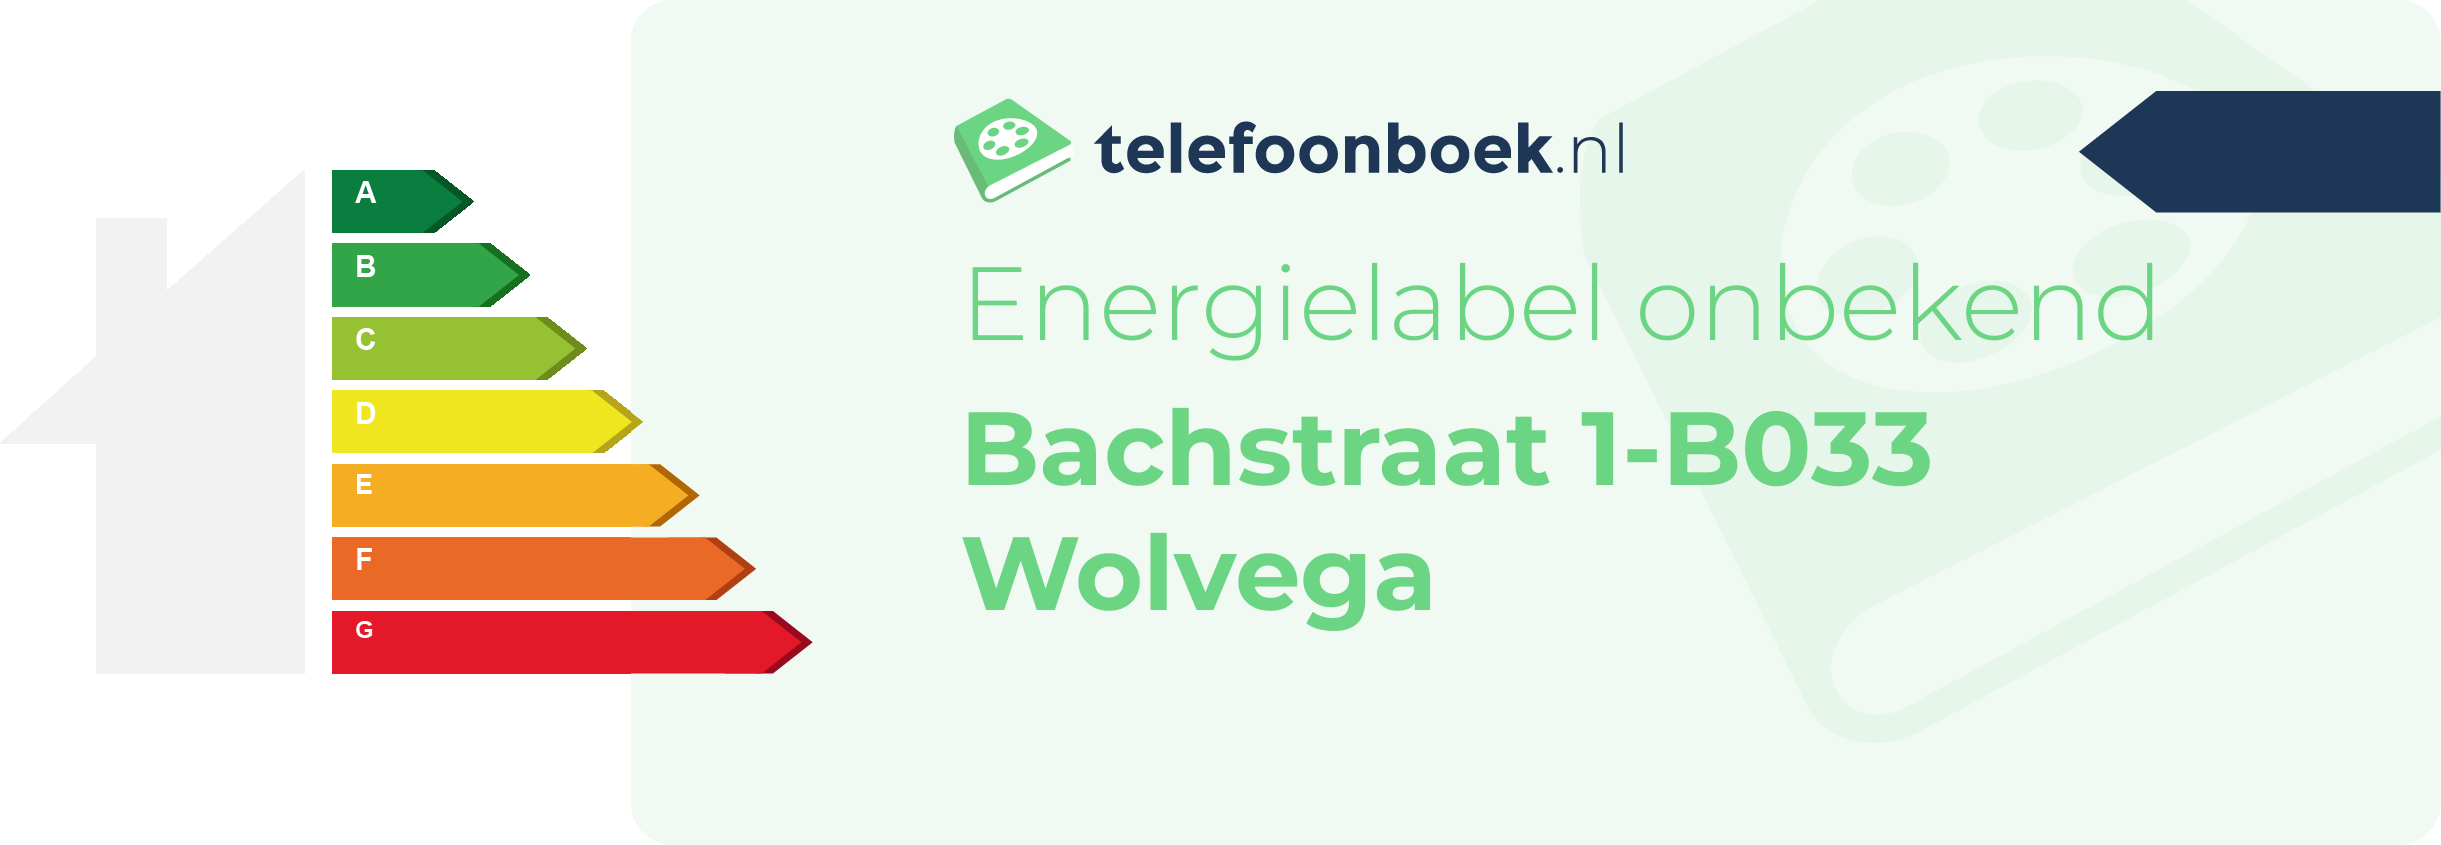 Energielabel Bachstraat 1-B033 Wolvega